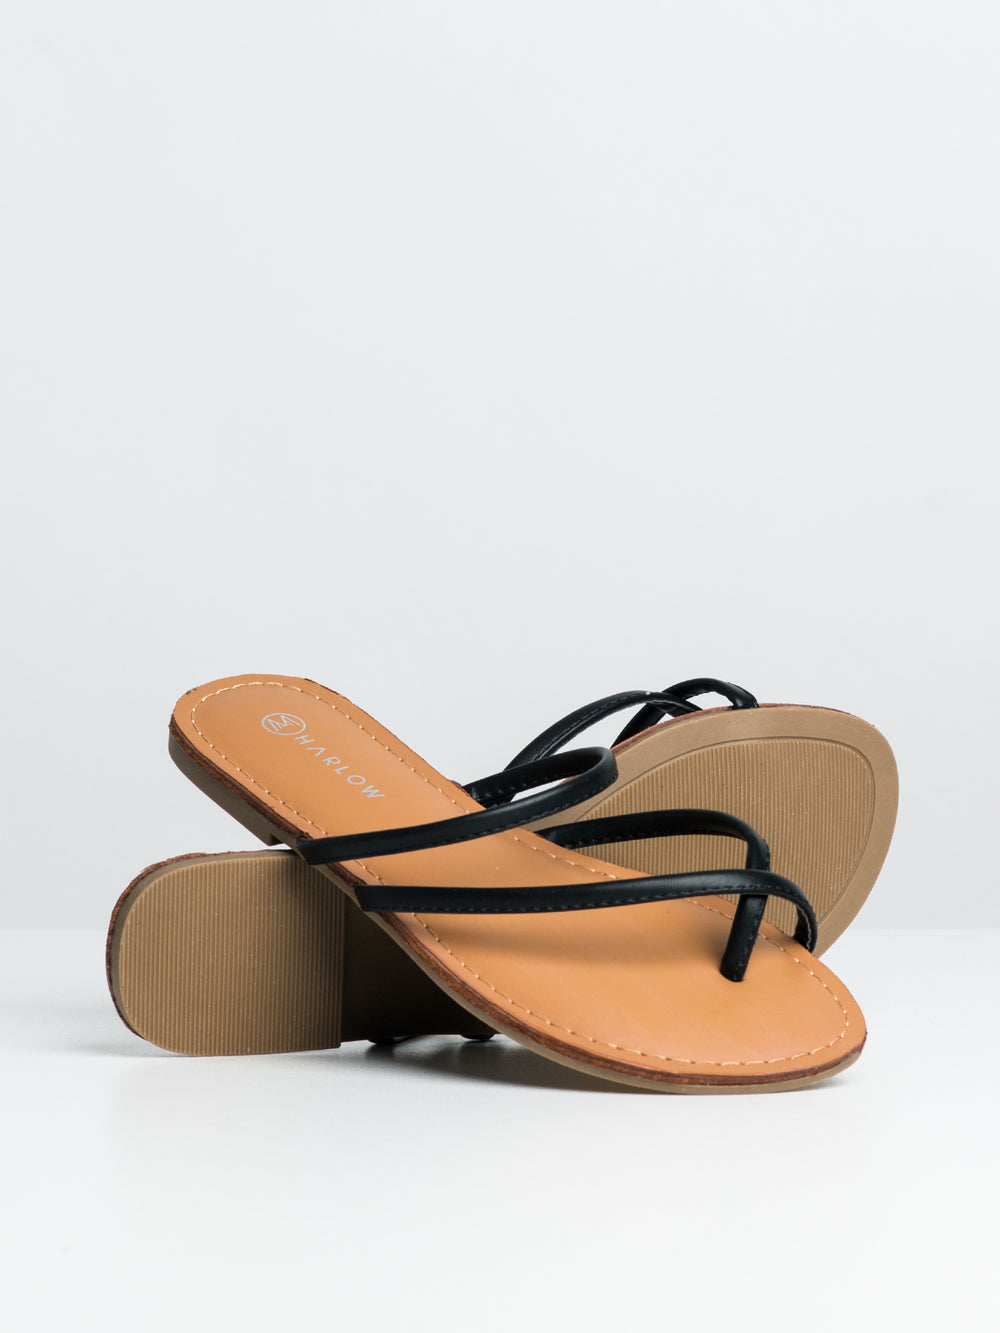 Hanni Sandals, Women's Strappy Sandals